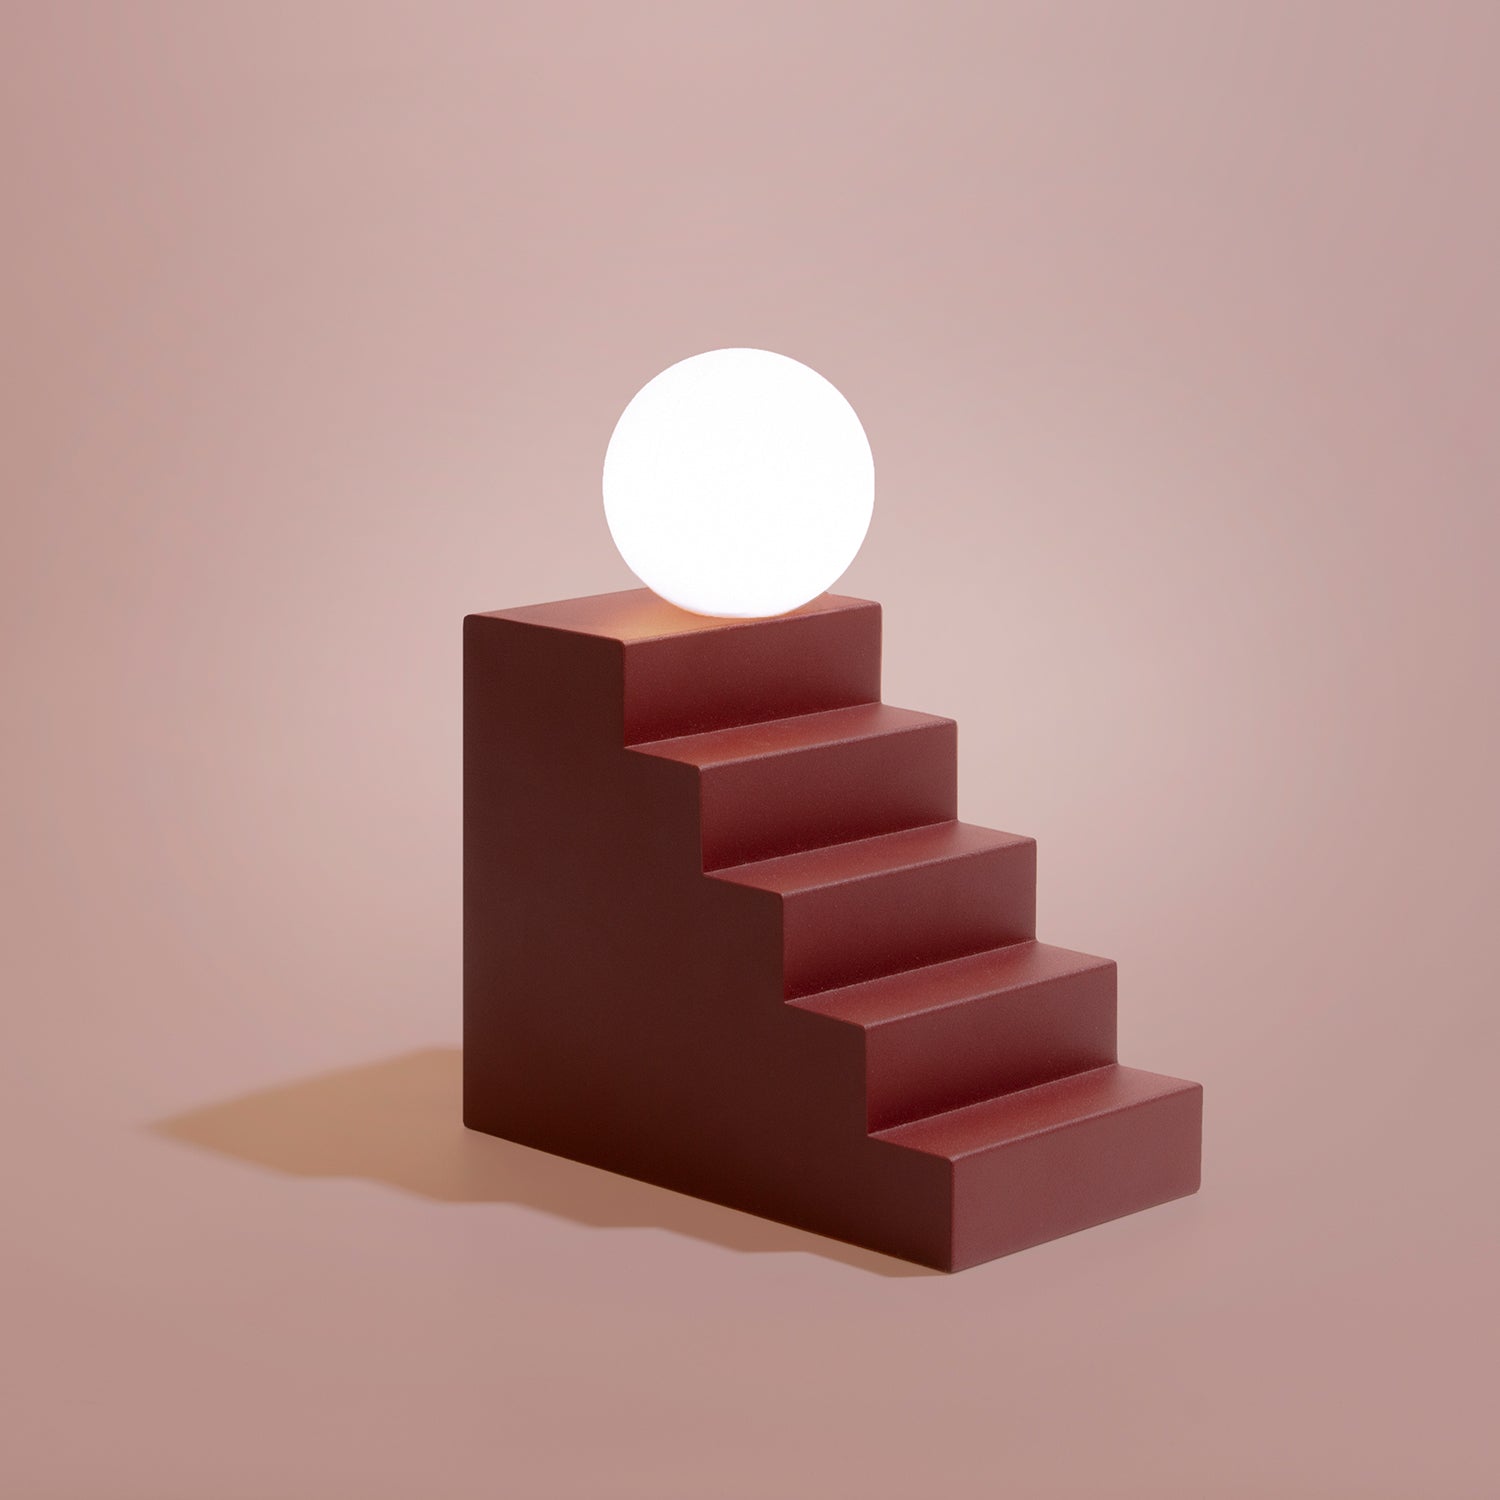 Stair - The Design Choice